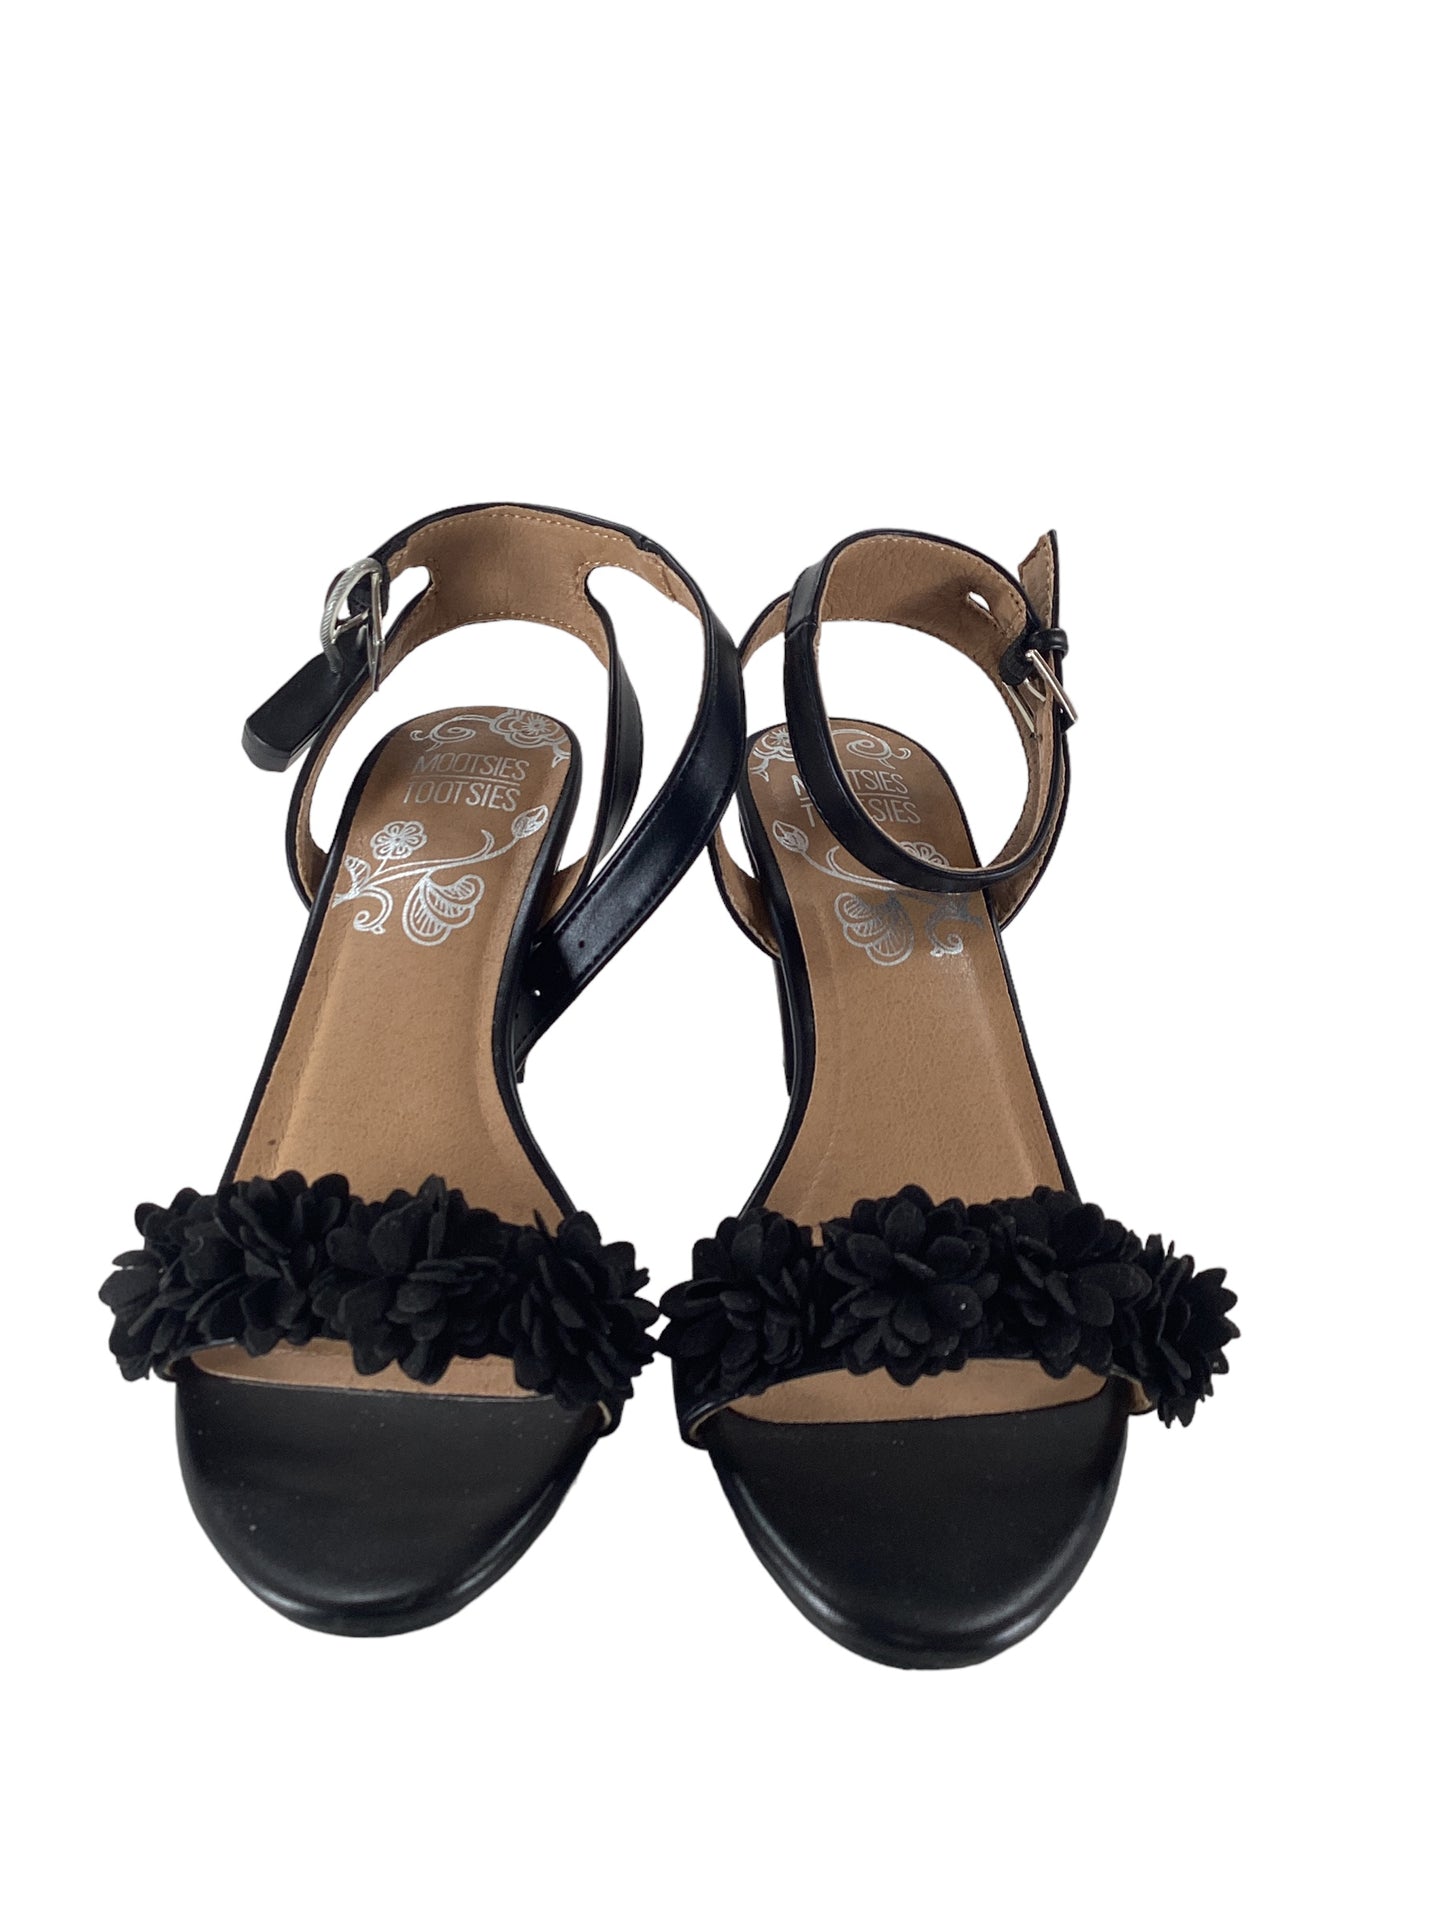 Sandals Heels Stiletto By Mootsies Tootsies  Size: 7.5